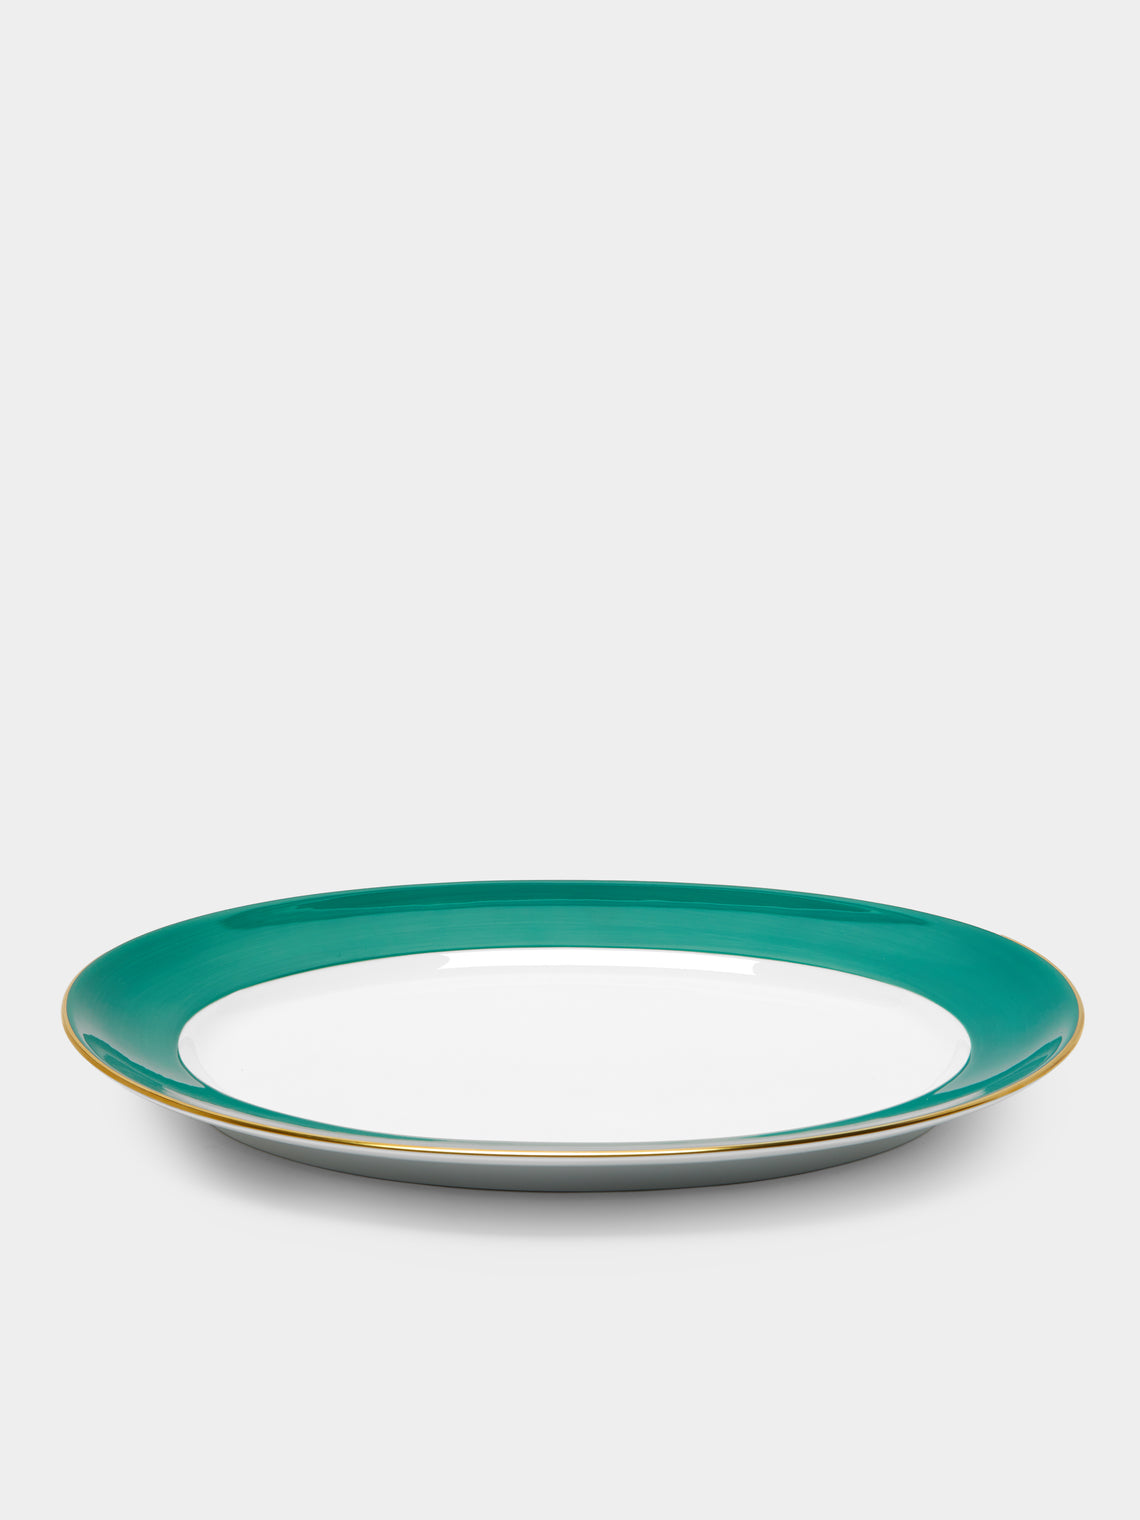 Robert Haviland & C. Parlon - Coco Hand-Painted Porcelain Oval Serving Platter -  - ABASK